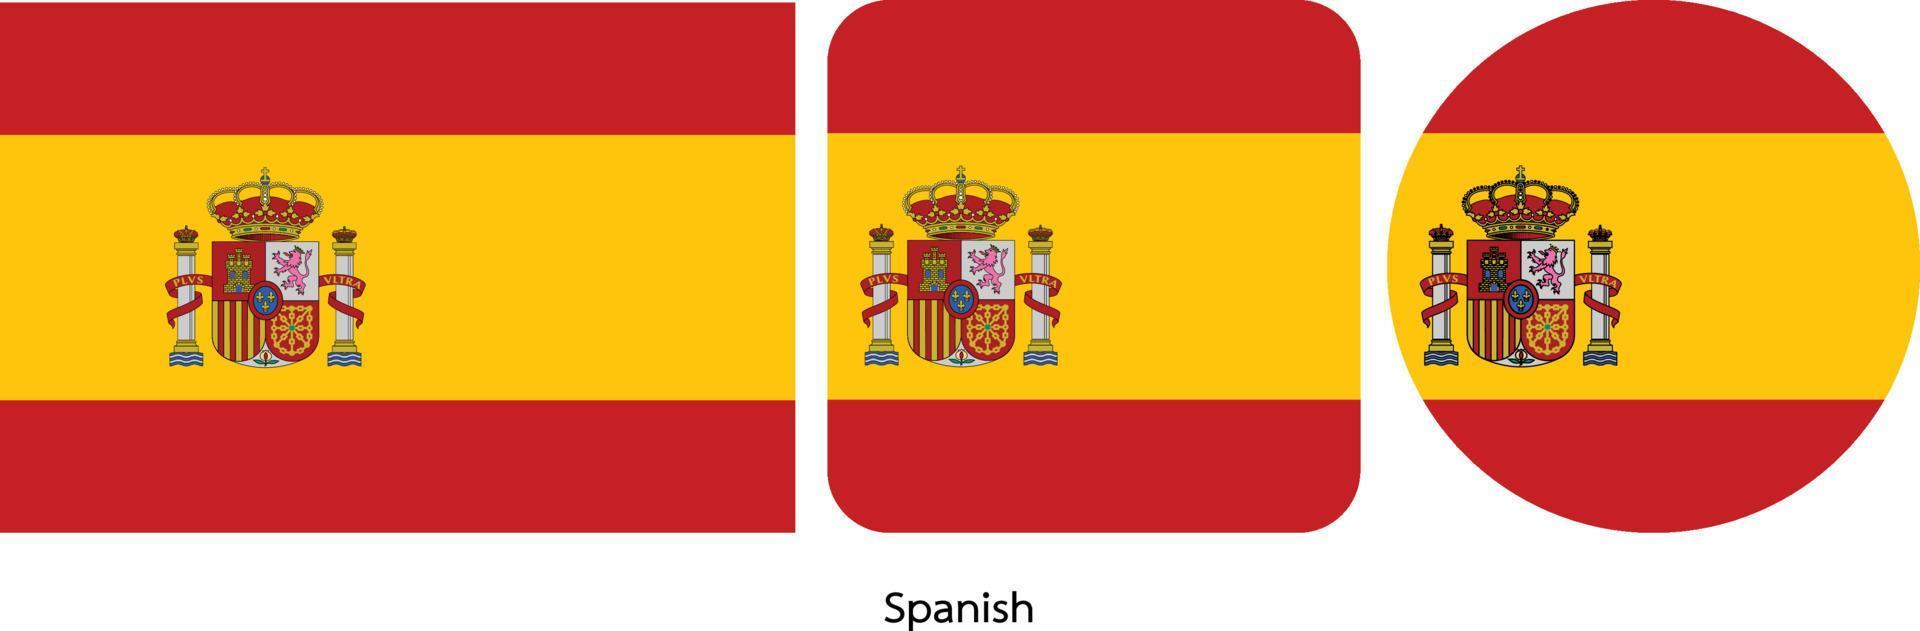 Spanish flag, vector illustration